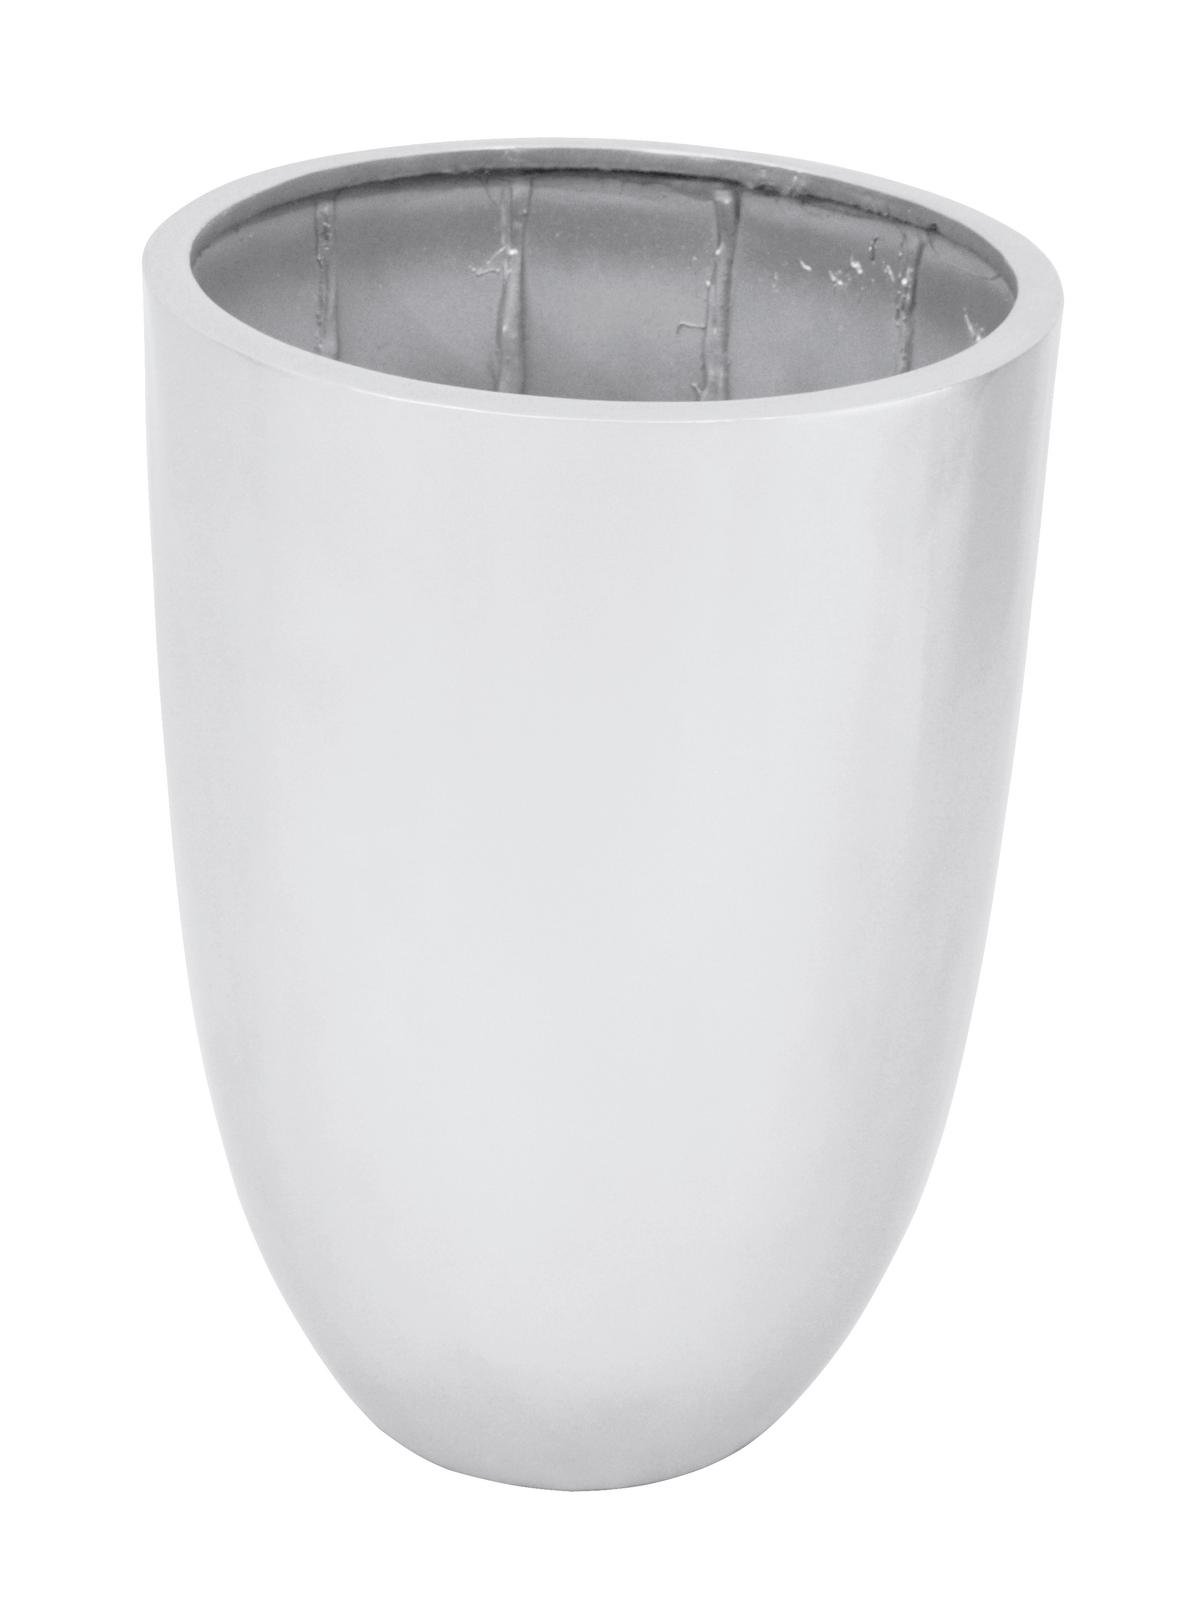 EUROPALMS LEICHTSIN CUP-69, shiny-silver